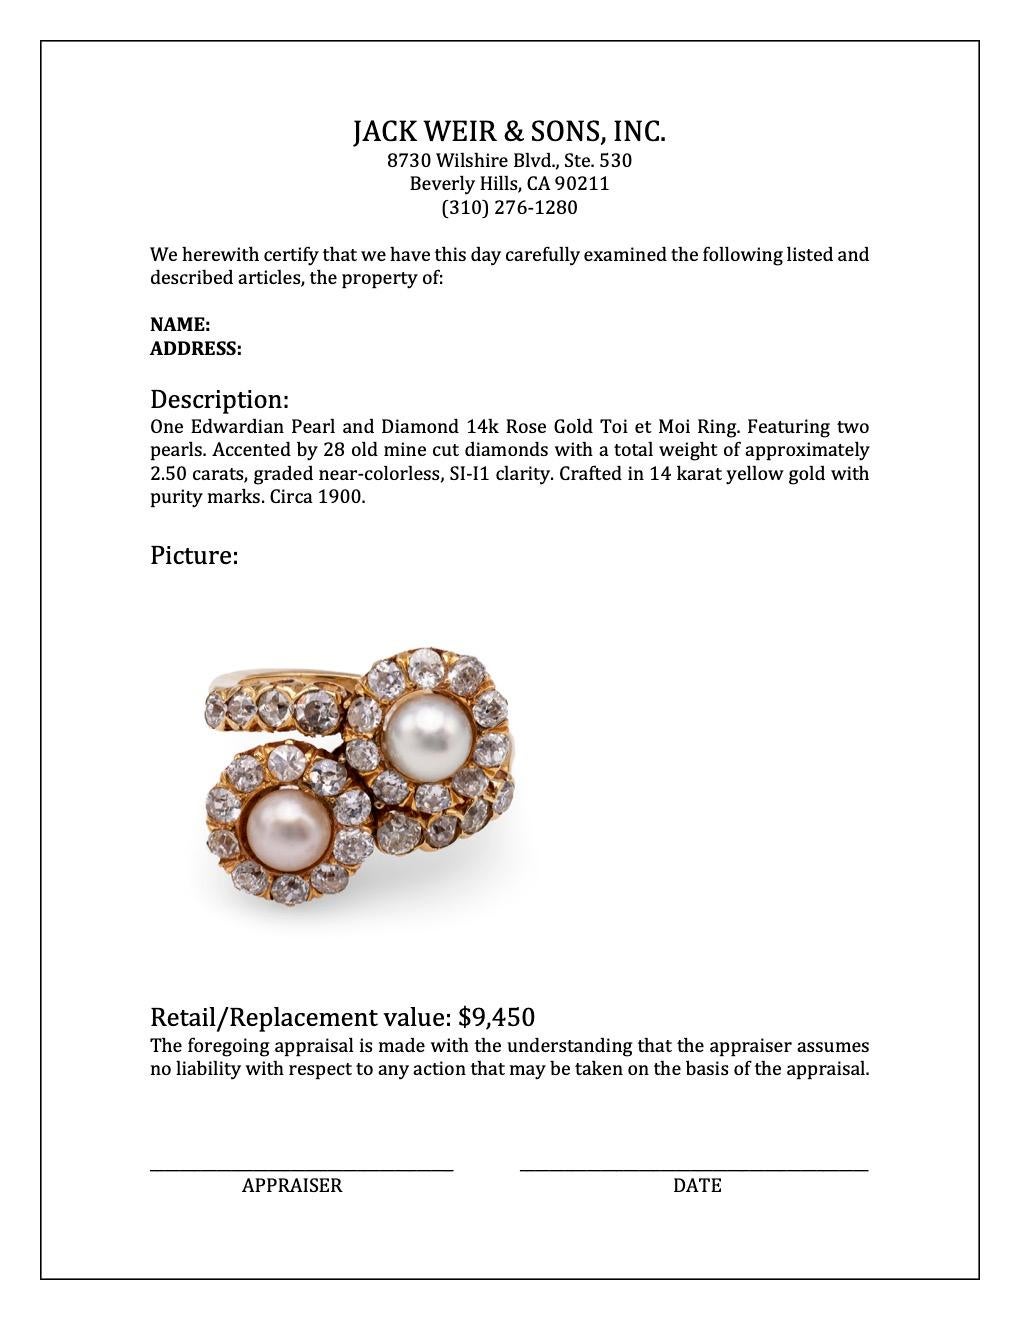 Edwardian Pearl and Diamond 14k Rose Gold Toi et Moi Ring 2